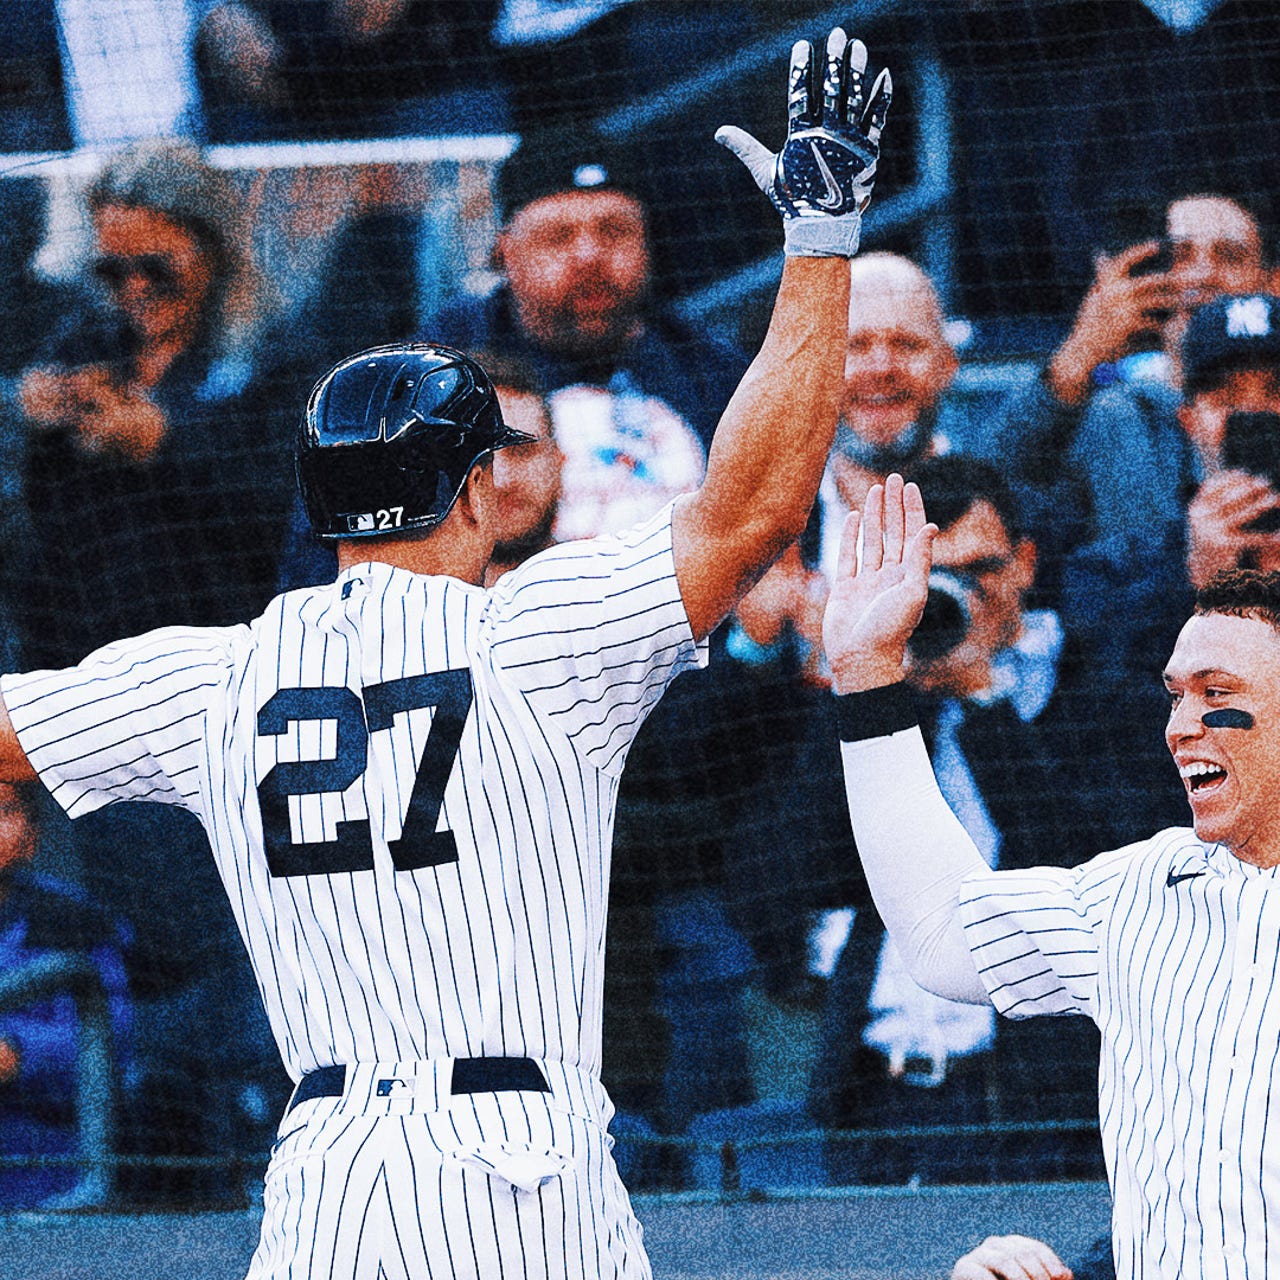 Yankees 2019 AL East Celebration 